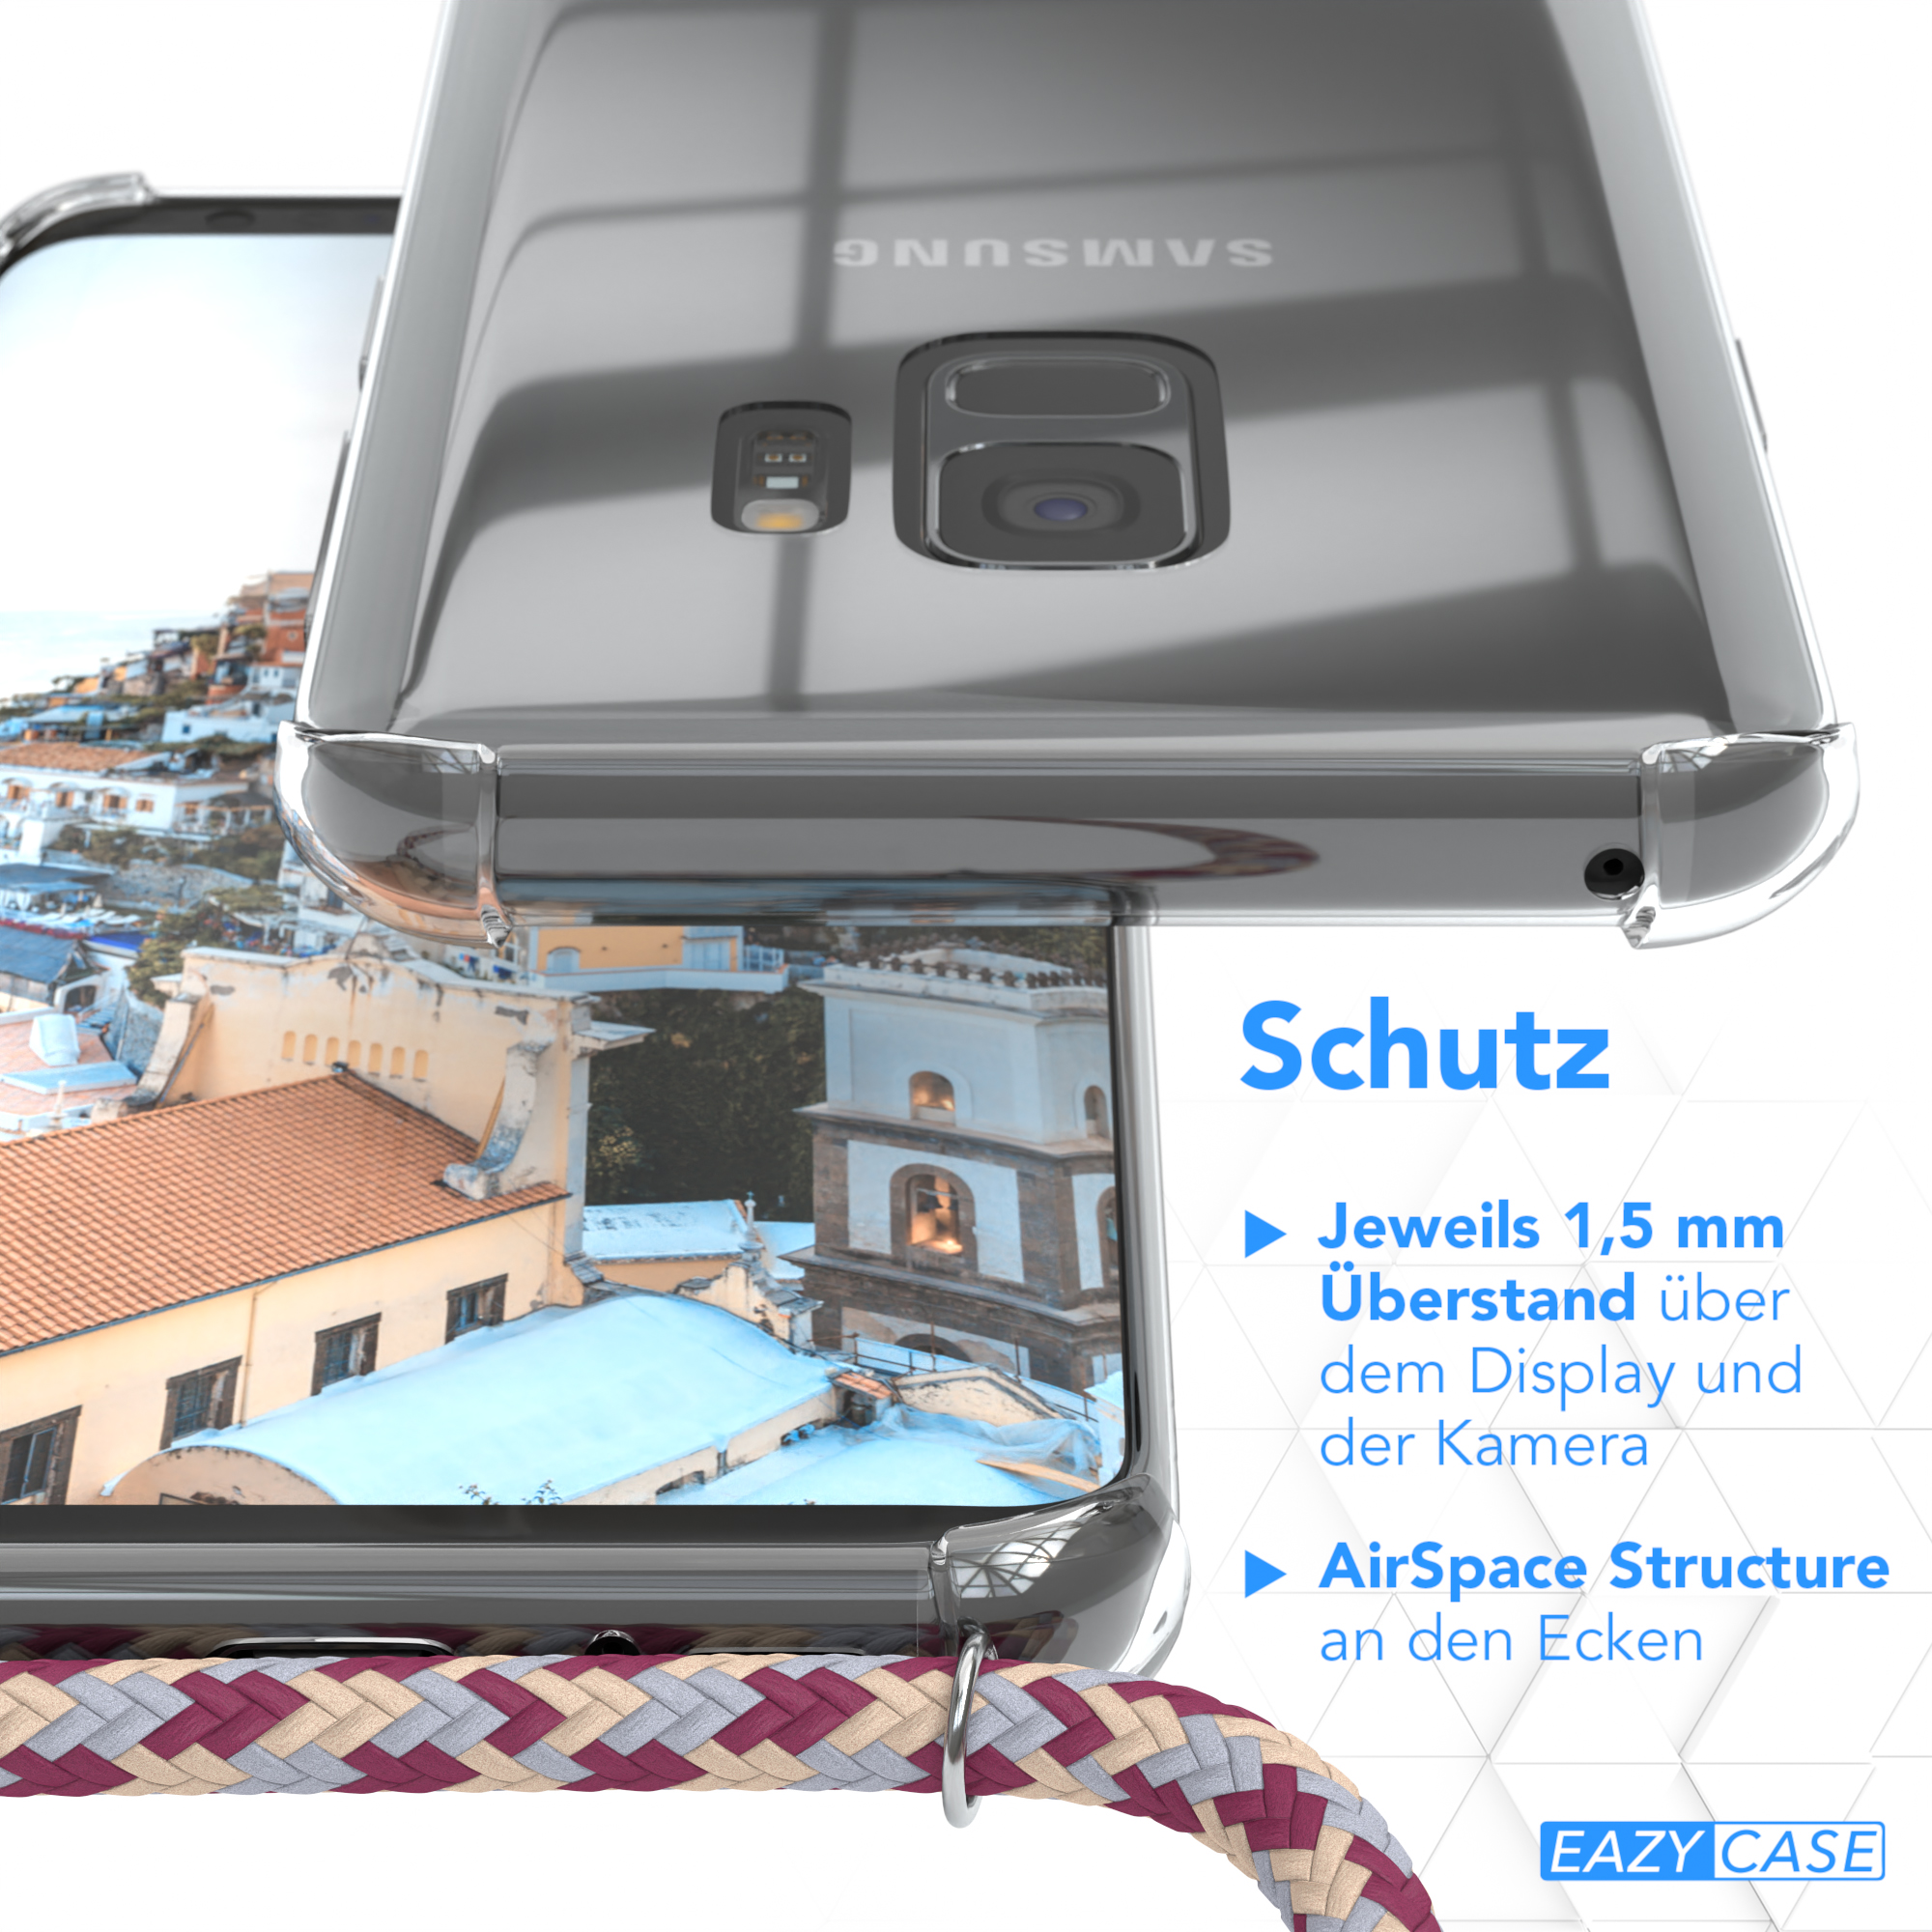 Clear Galaxy CASE Samsung, S9, Gold Clips mit Umhängetasche, Cover EAZY Rot Beige Umhängeband, Camouflage /